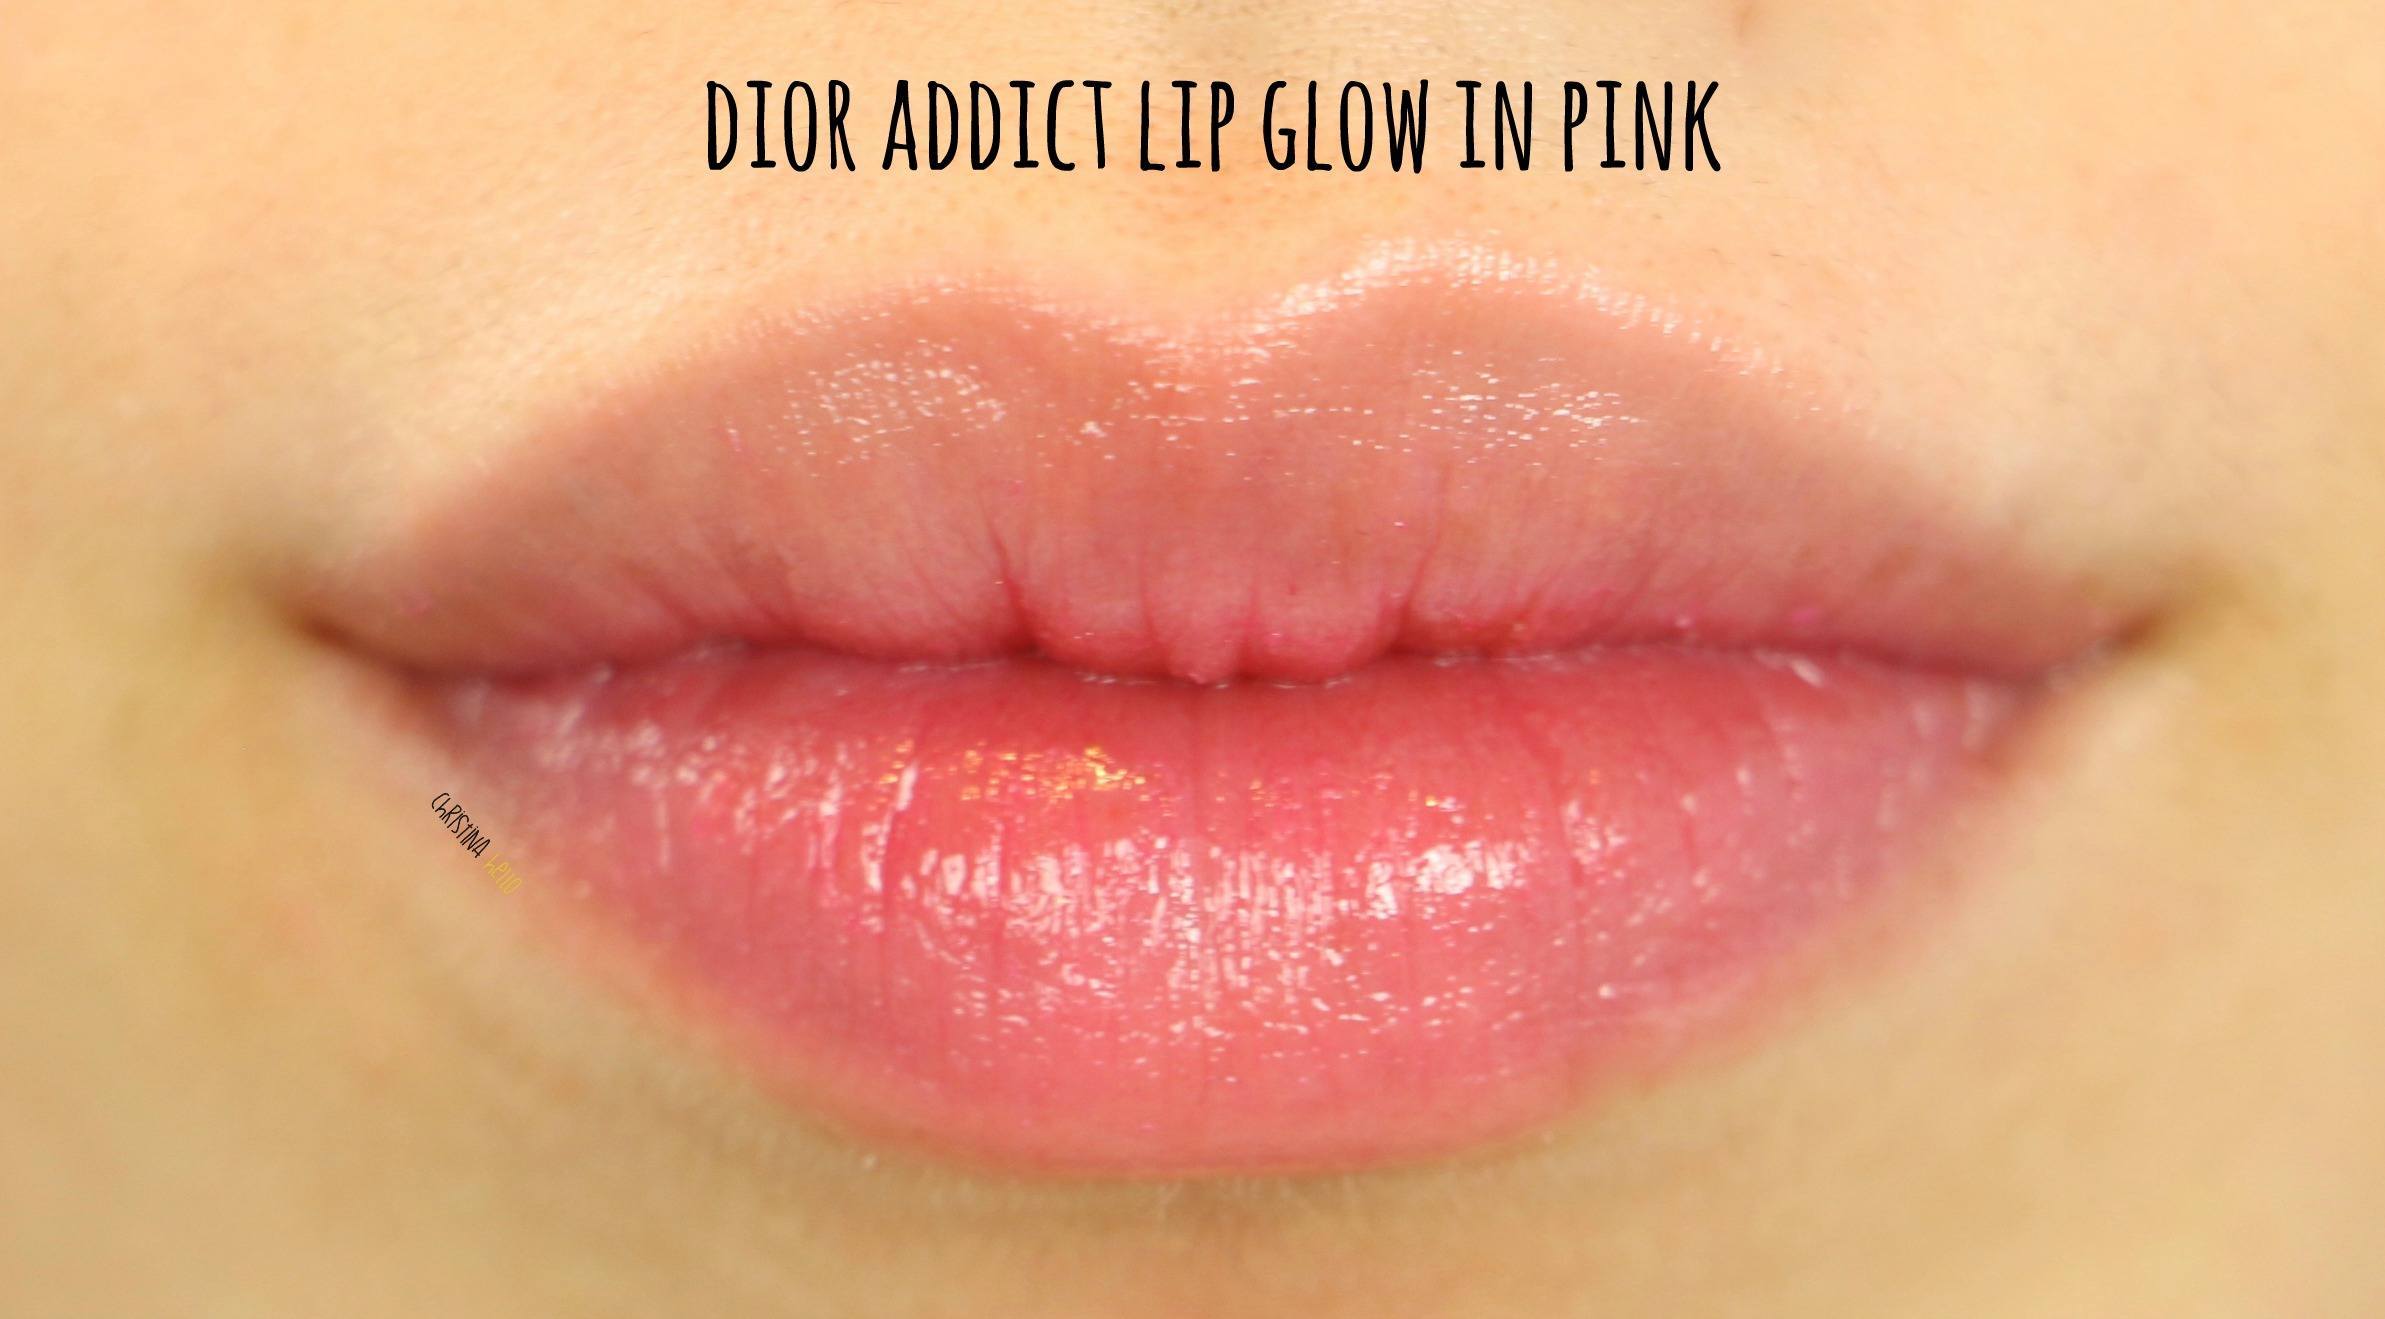 dior addict lip glow coral review